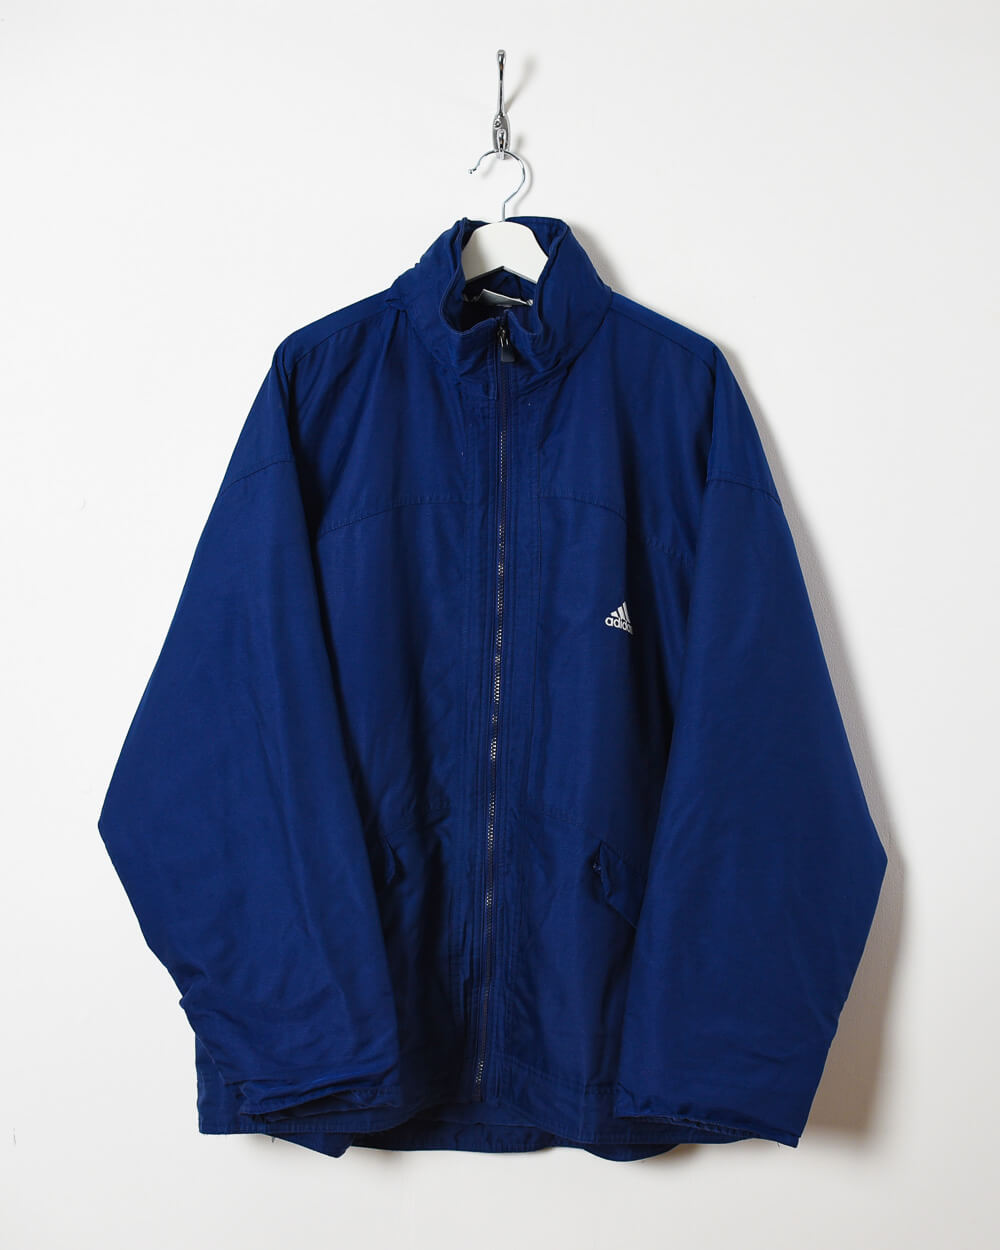 Navy Adidas Winter Coat - Large